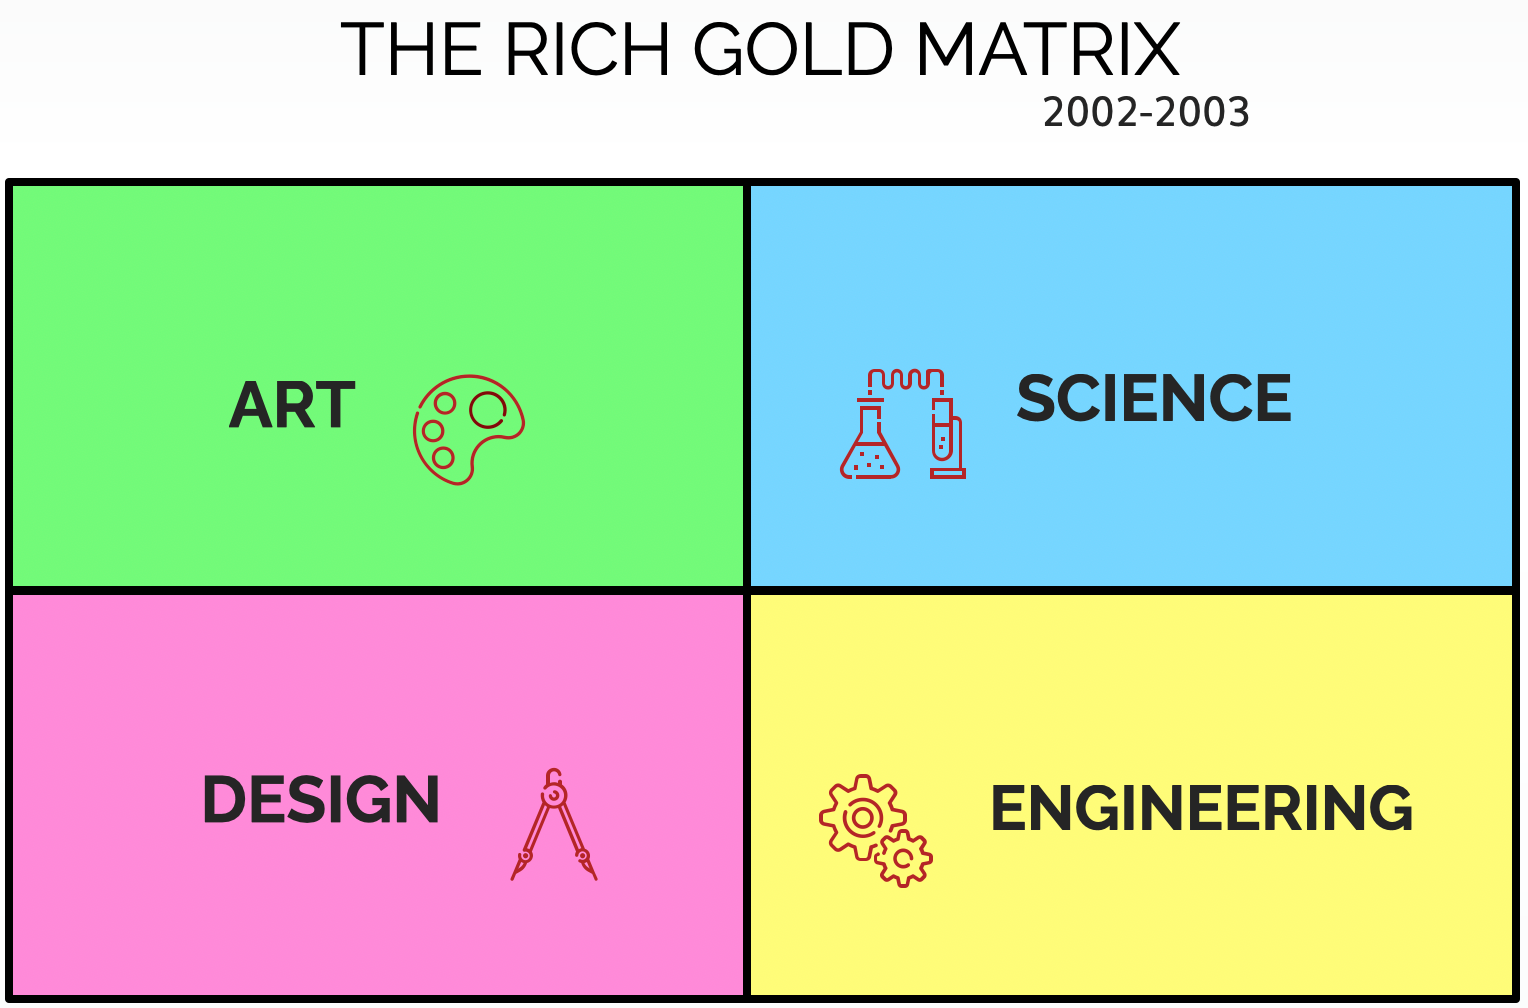 The Rich Gold Matrix quadrants: Art, Science, Engineering, and Design